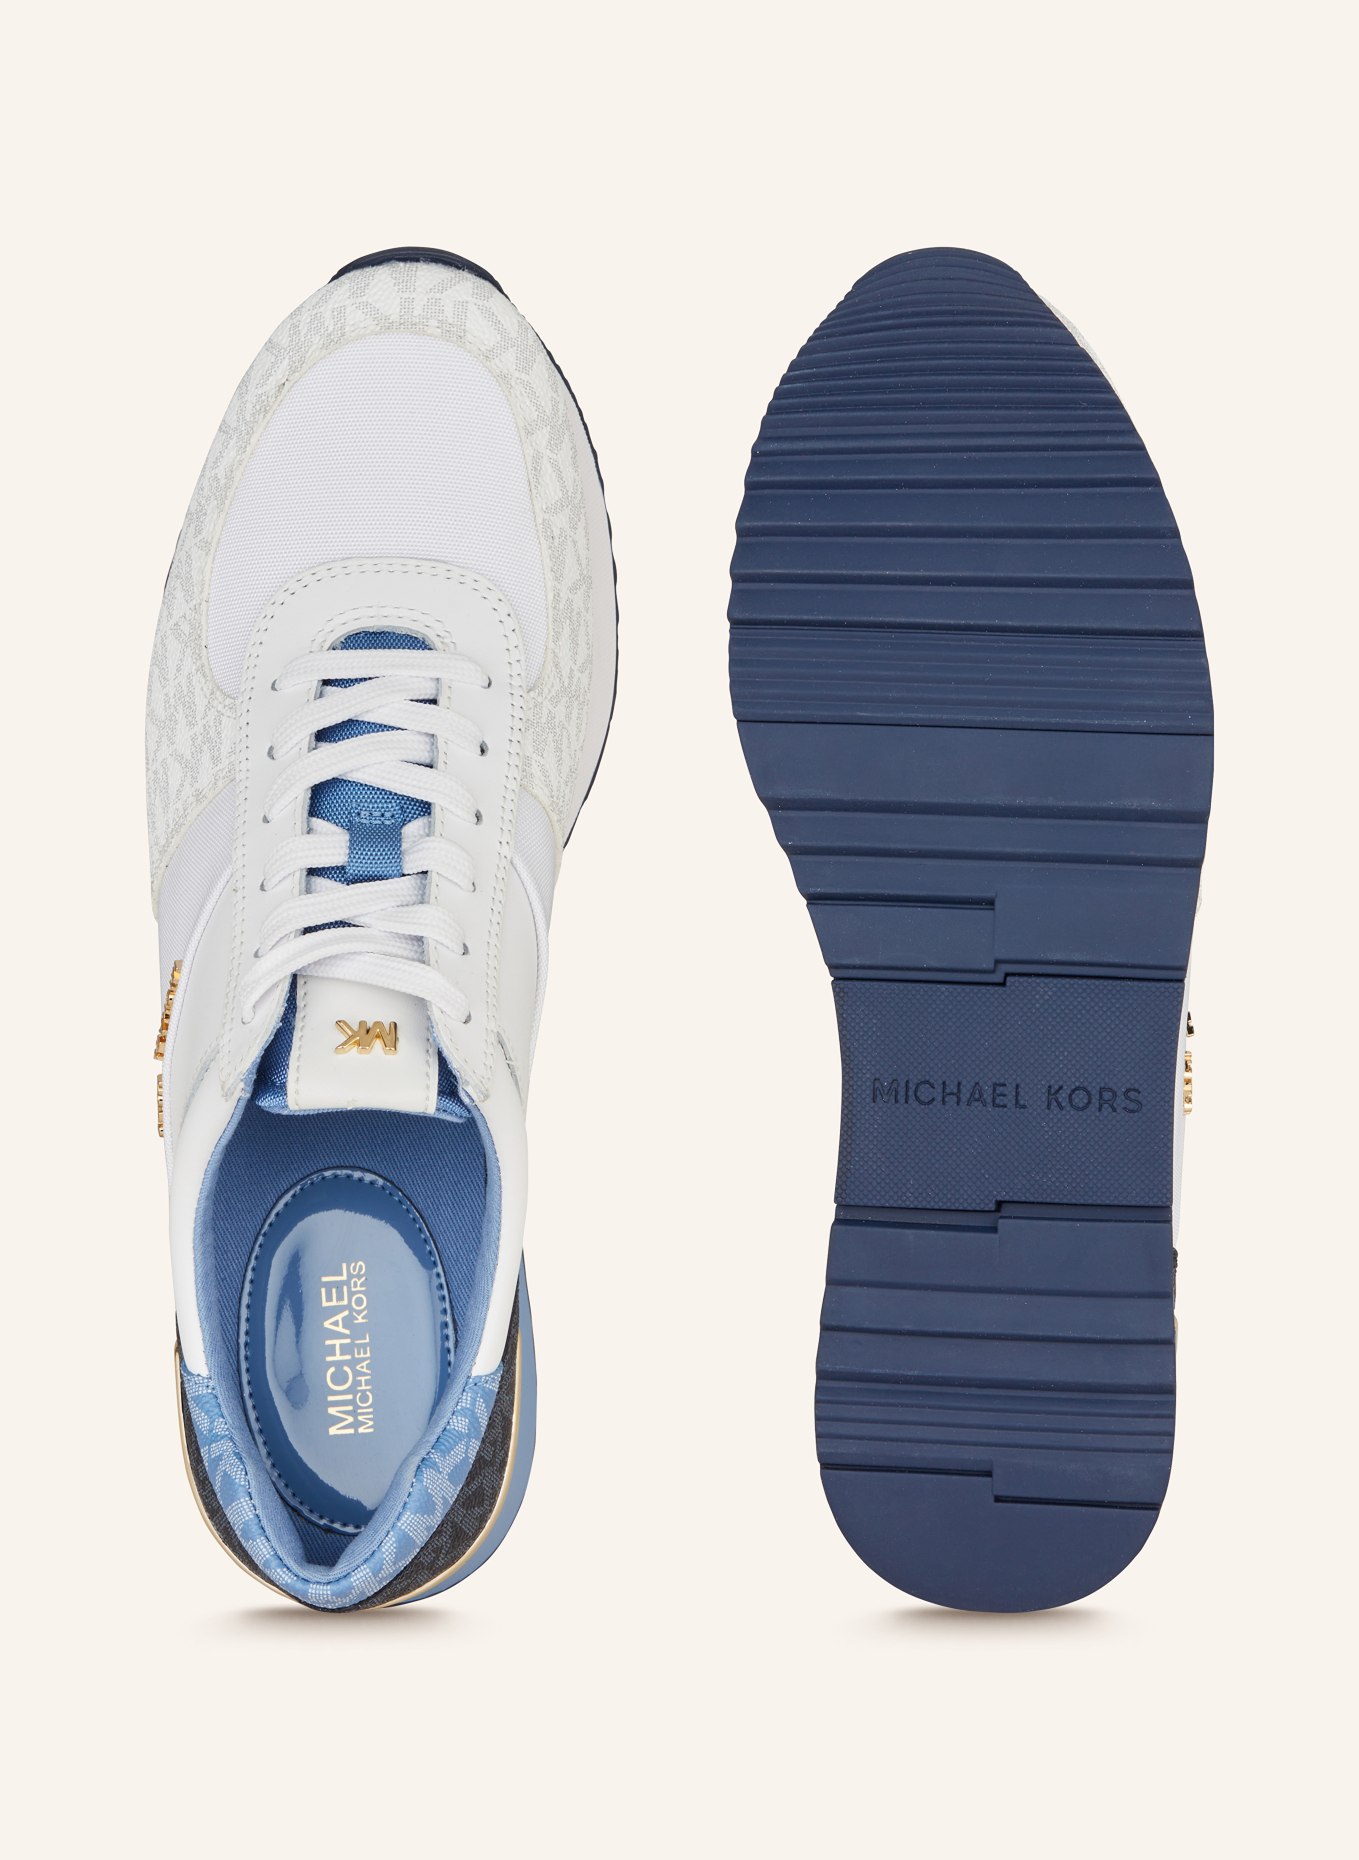 MICHAEL KORS Sneaker ALLIE, Farbe: 455 french blu multi (Bild 5)